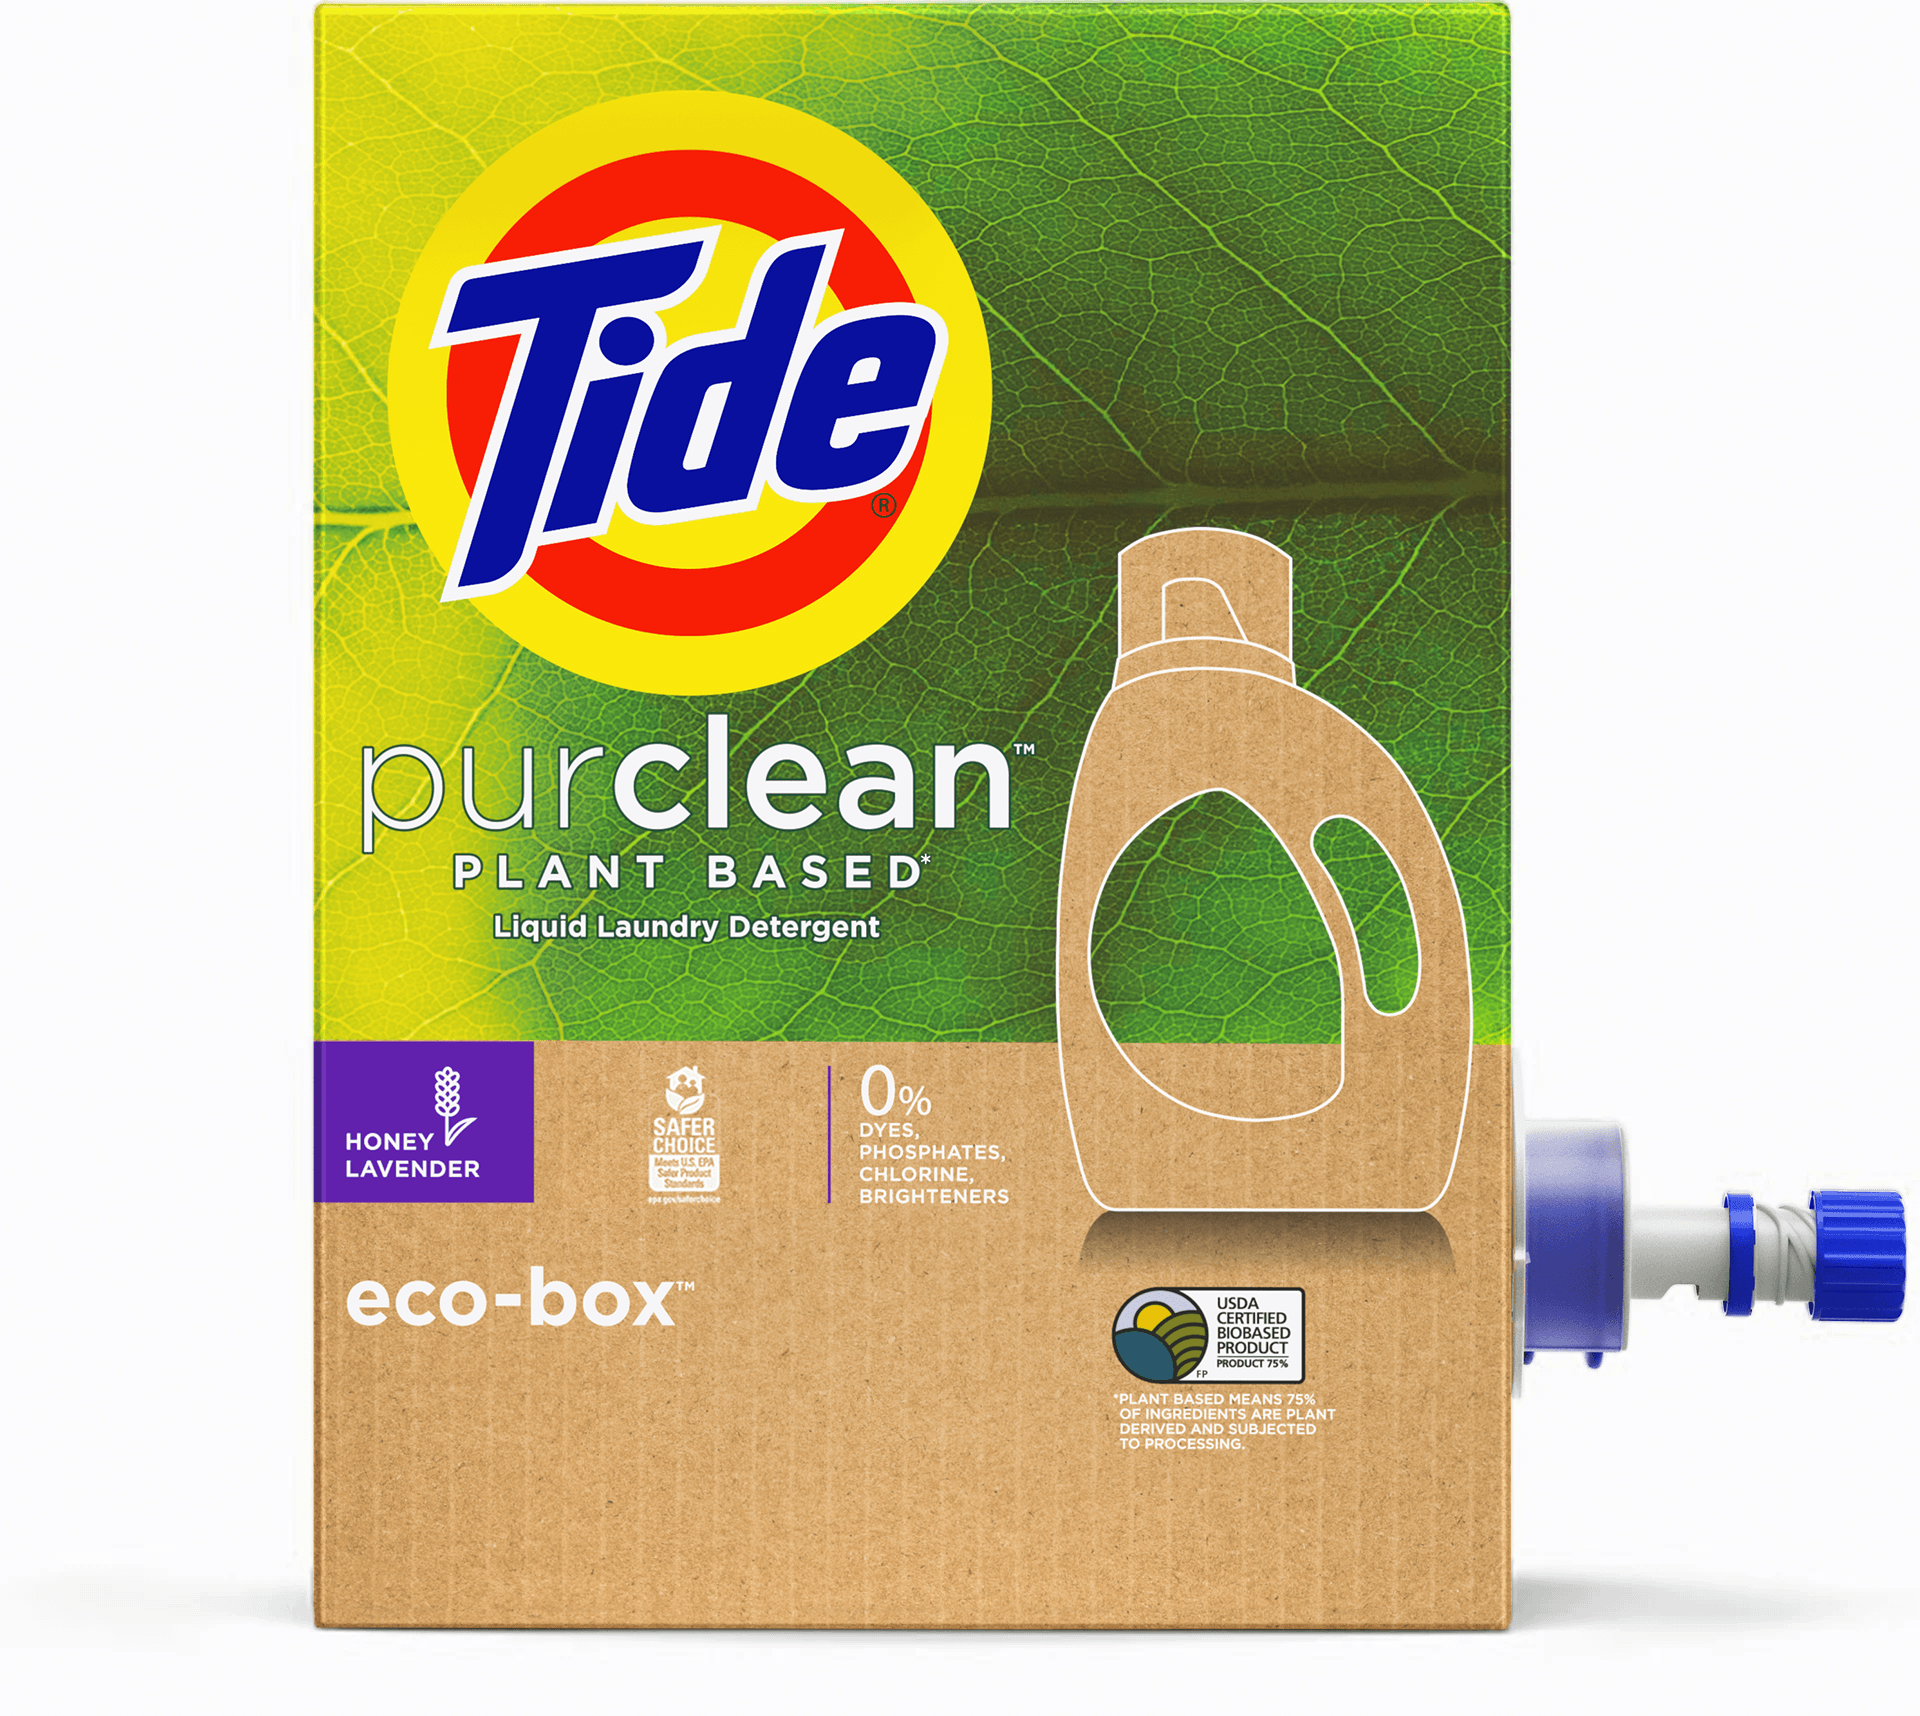 Tide Eco-Box purclean Plant-Based Liquid Laundry Detergent - 105 ounces, color green